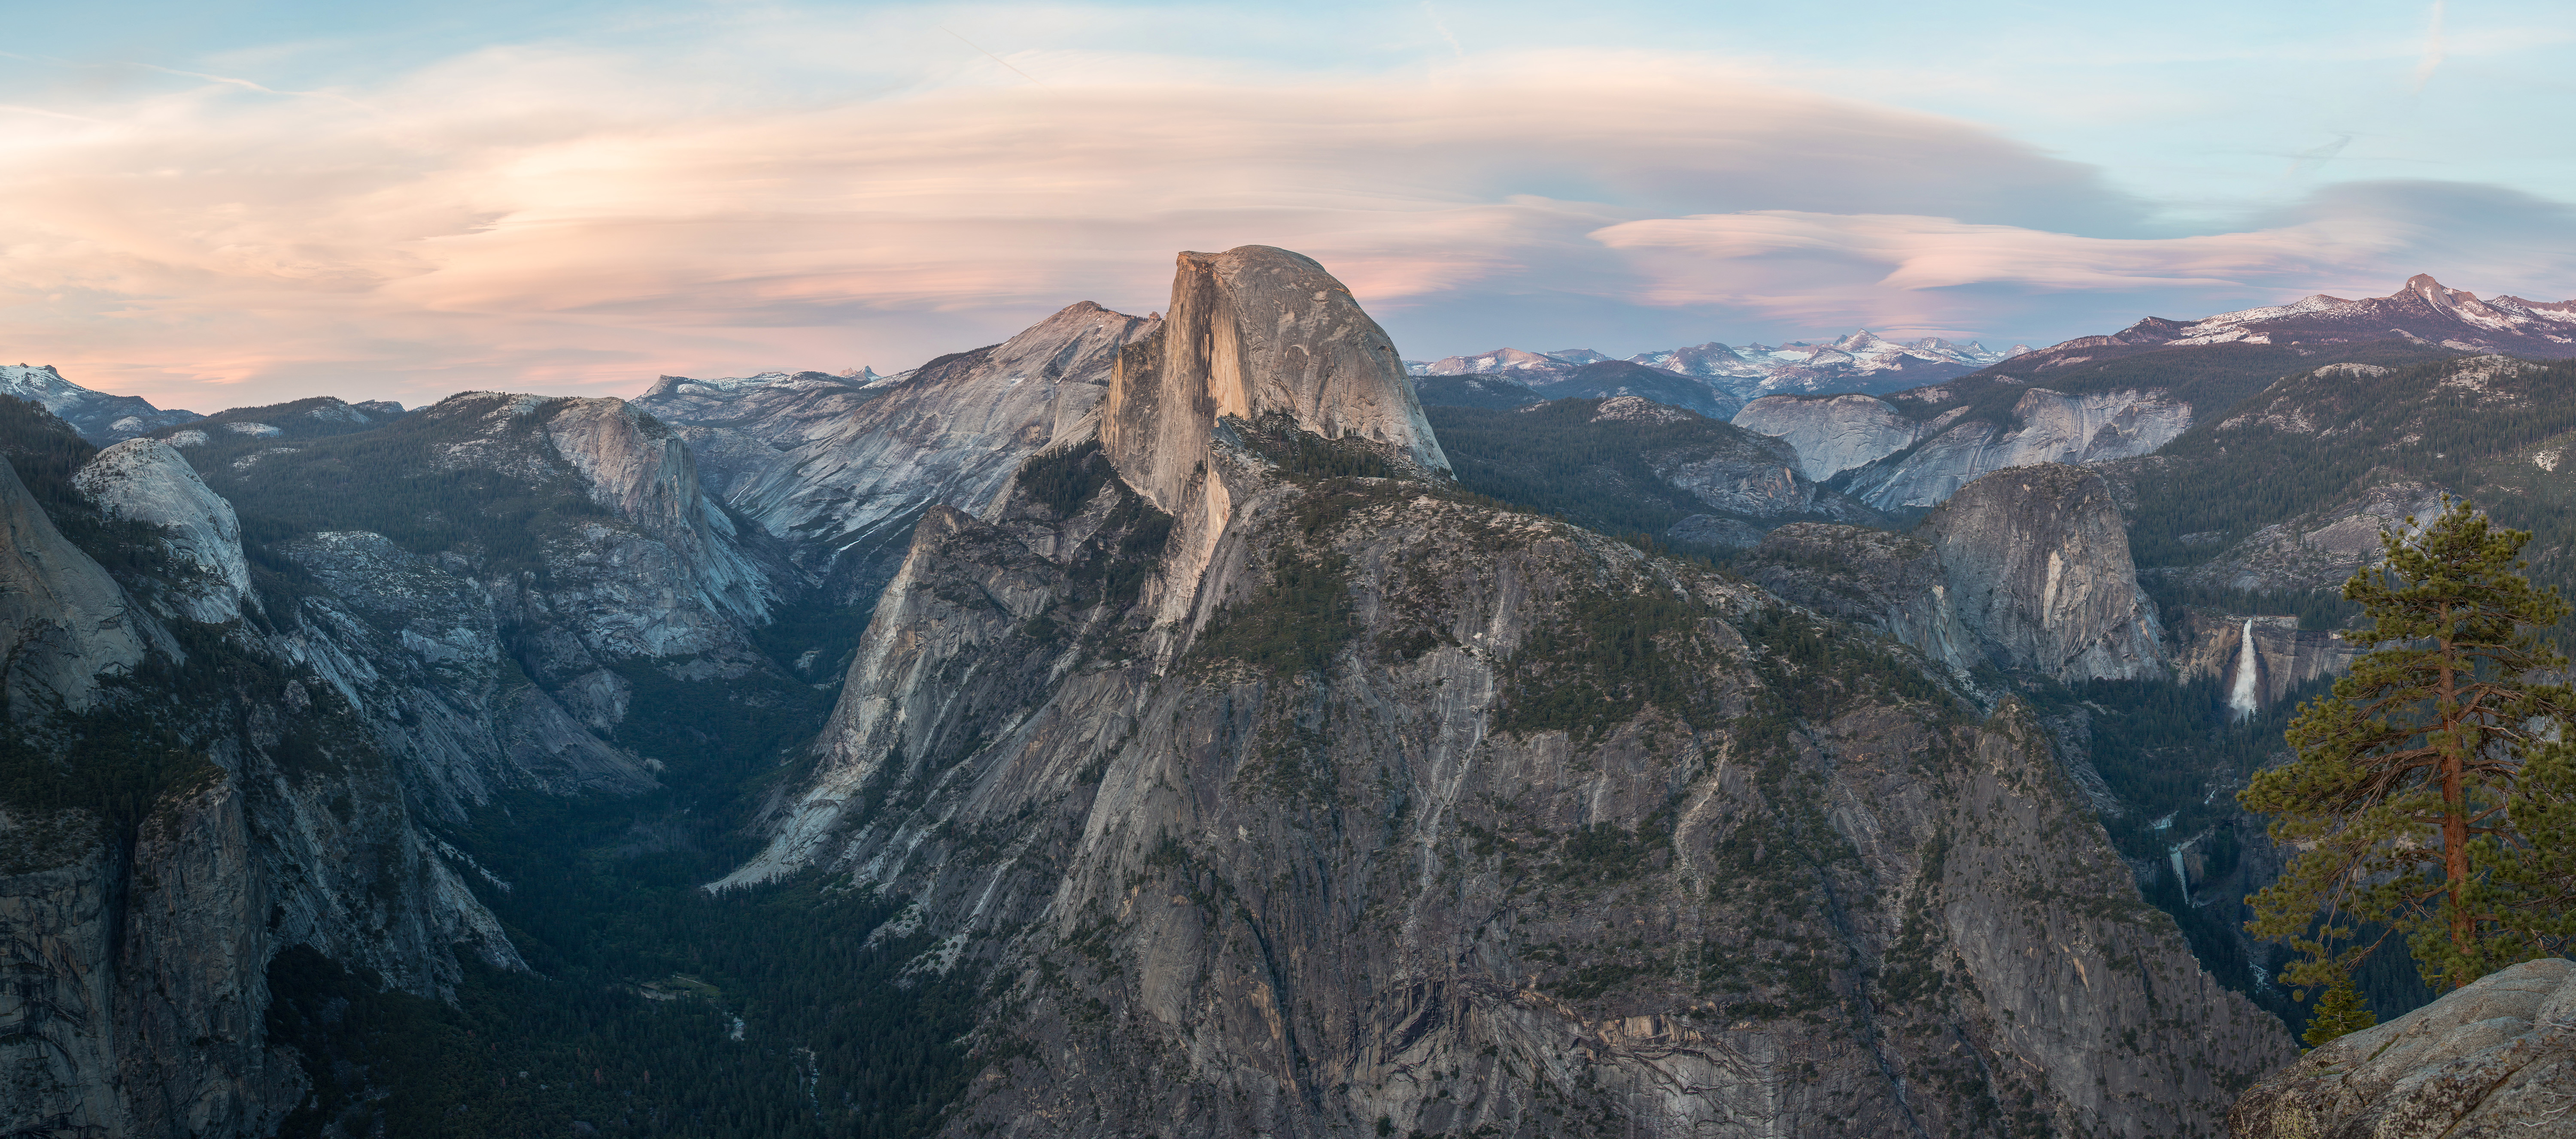 Glacier_Point_at_Sunset,_Yosemite_NP,_CA,_US_-_Diliff